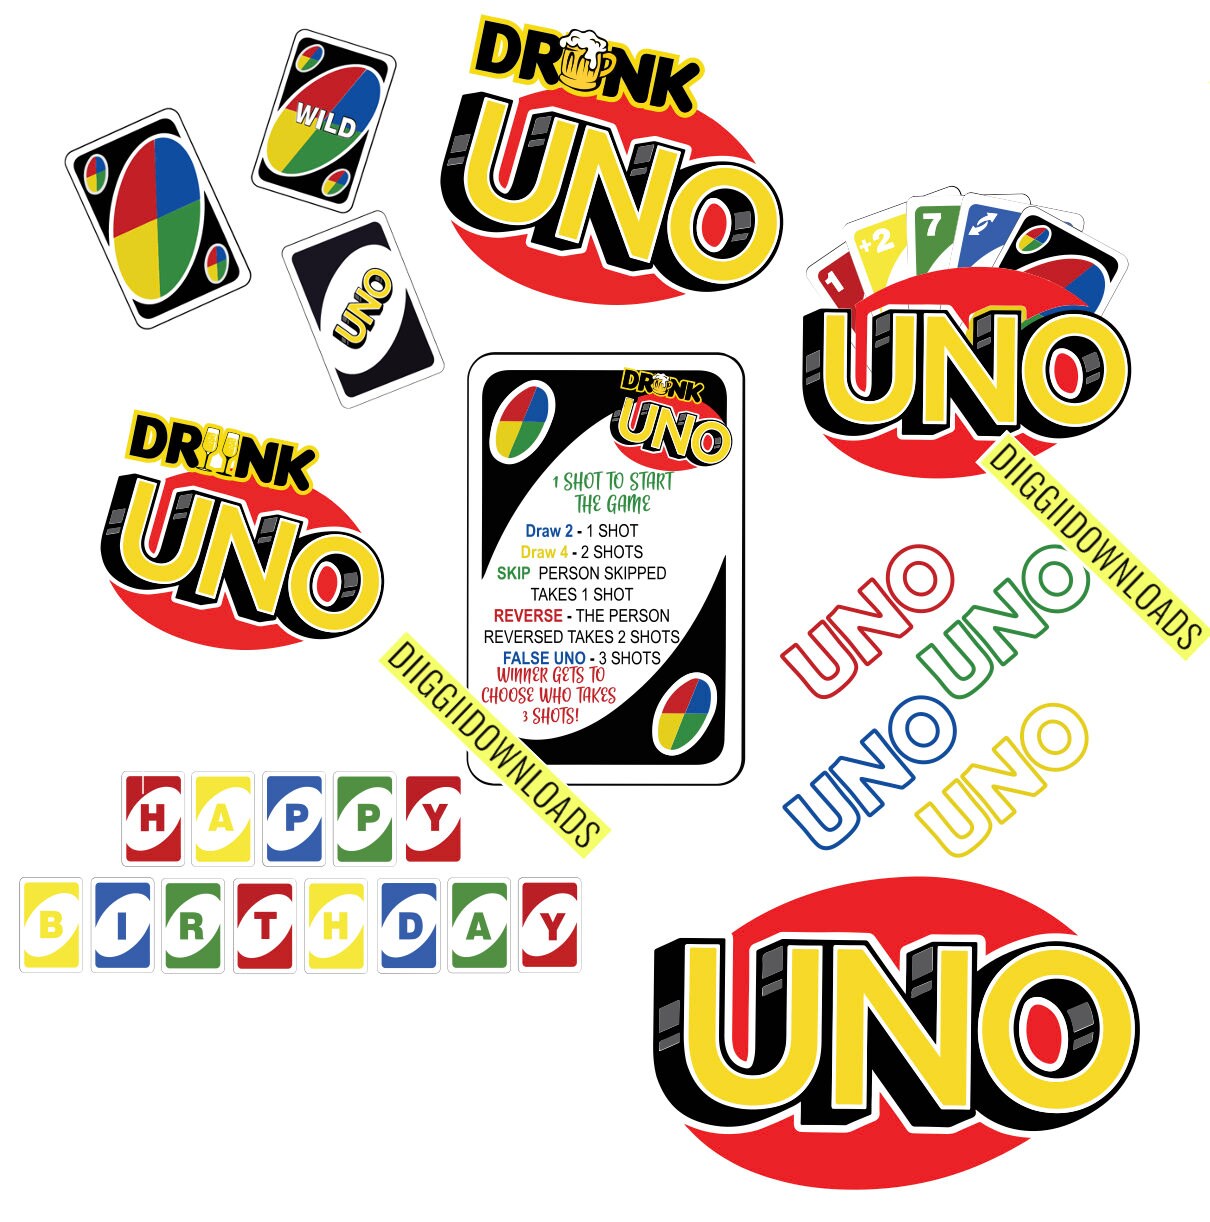 Miniature Uno Cards -  Schweiz